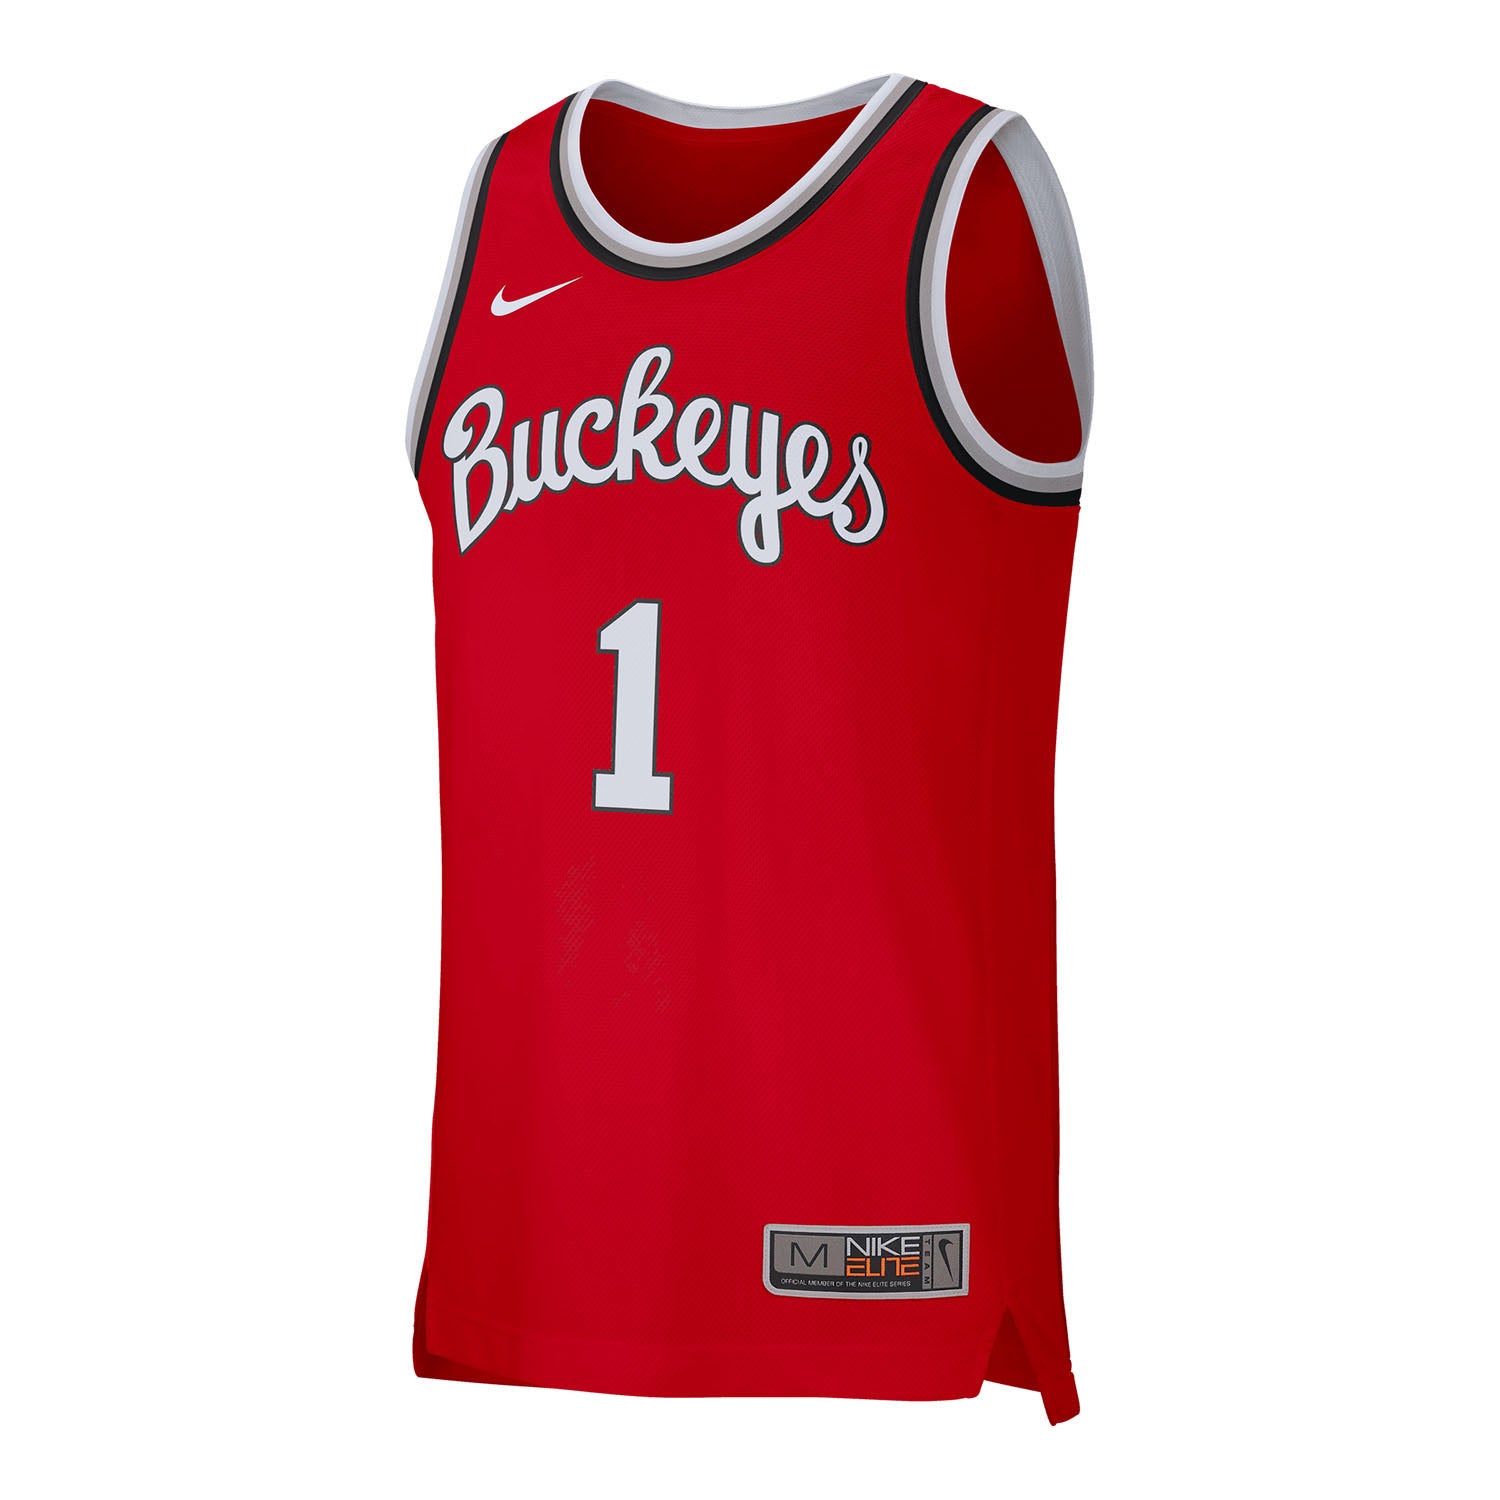 Men's Nike Scarlet Ohio State Buckeyes Retro Replica Basketball Jersey